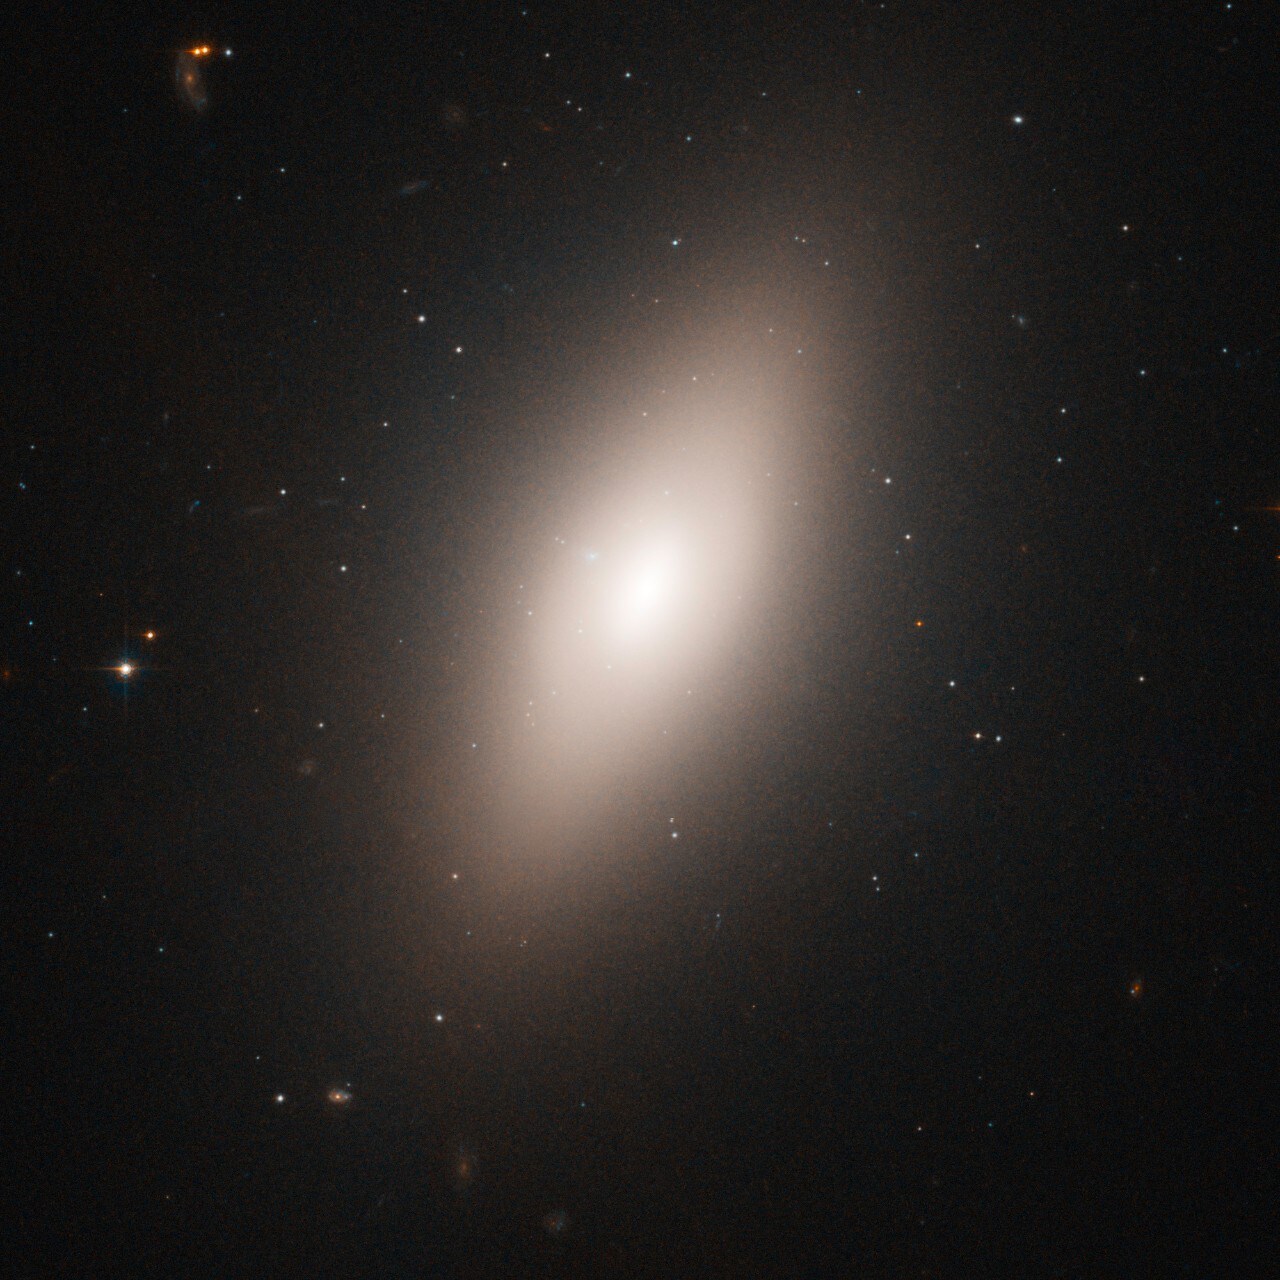 Image top of page: Galaxy NGC 3501. Credit: ESA/Hubble & NASA. Acknowledgement: Nick Rose. Image immediately above: Virgo cluster galaxy NGC 4660. Credit: ESA, NASA and E. Peng (Peking University, Beijing).